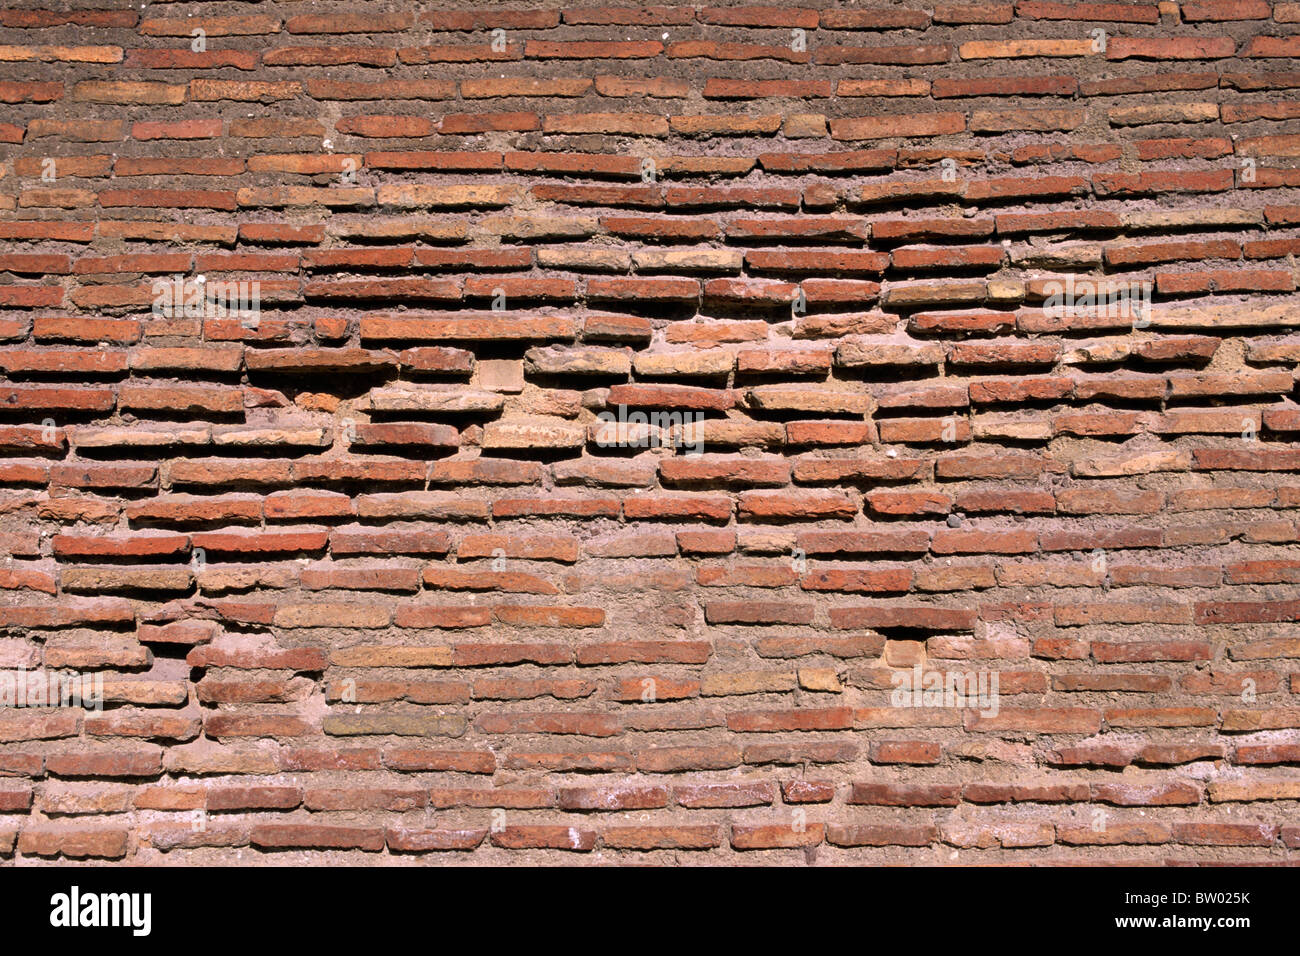 Italy, Rome, Aurelian Walls, red bricks close up Stock Photo